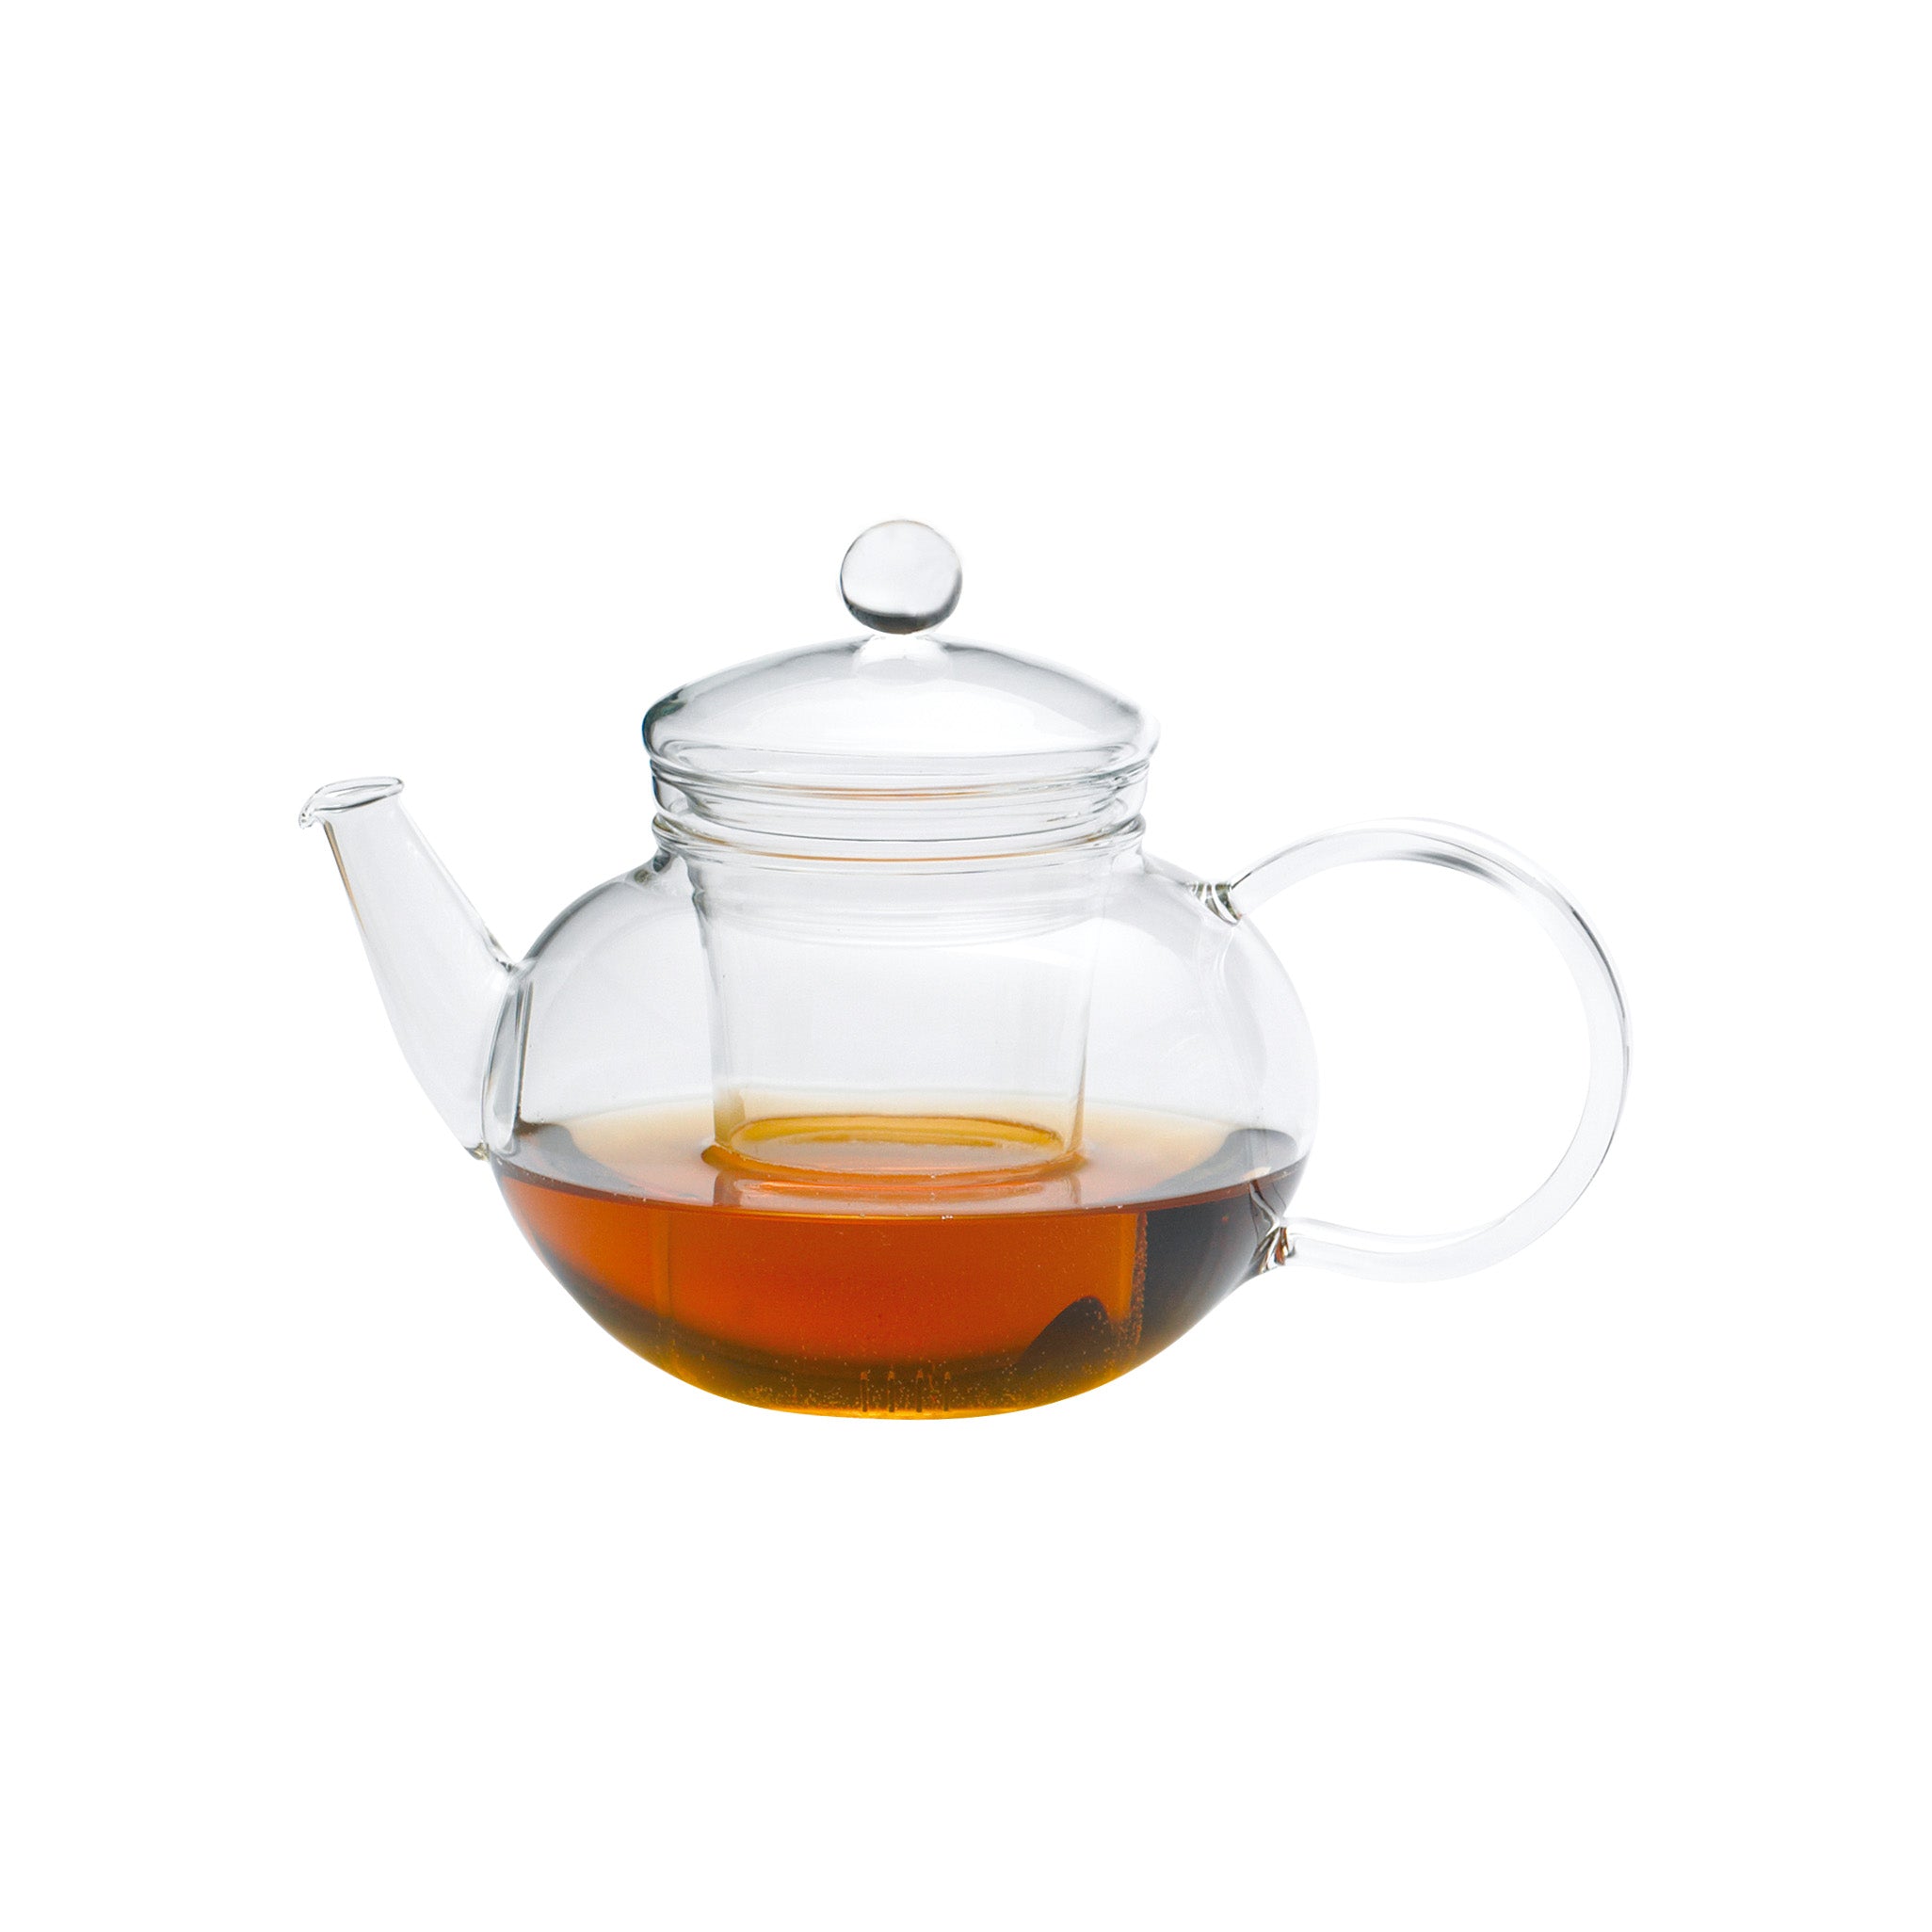 Trendglas Teapot MIKO 0.8L with Glass Strainer